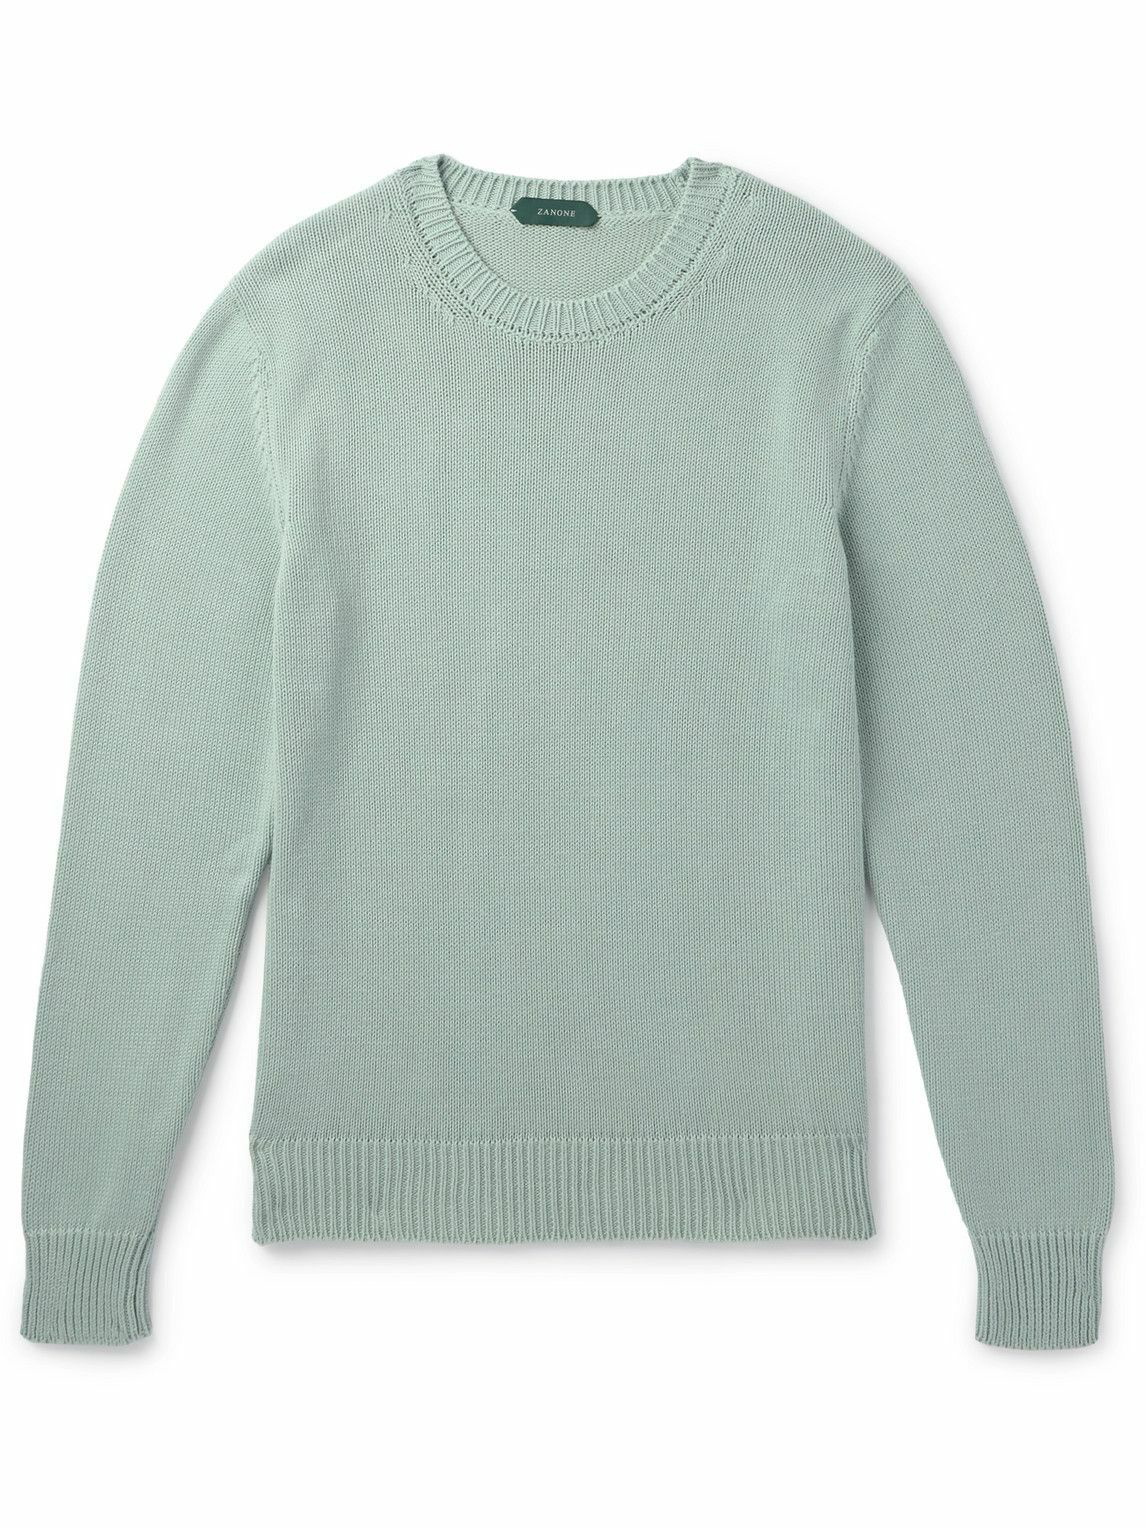 Photo: Incotex - Slim-Fit Cotton Sweater - Green